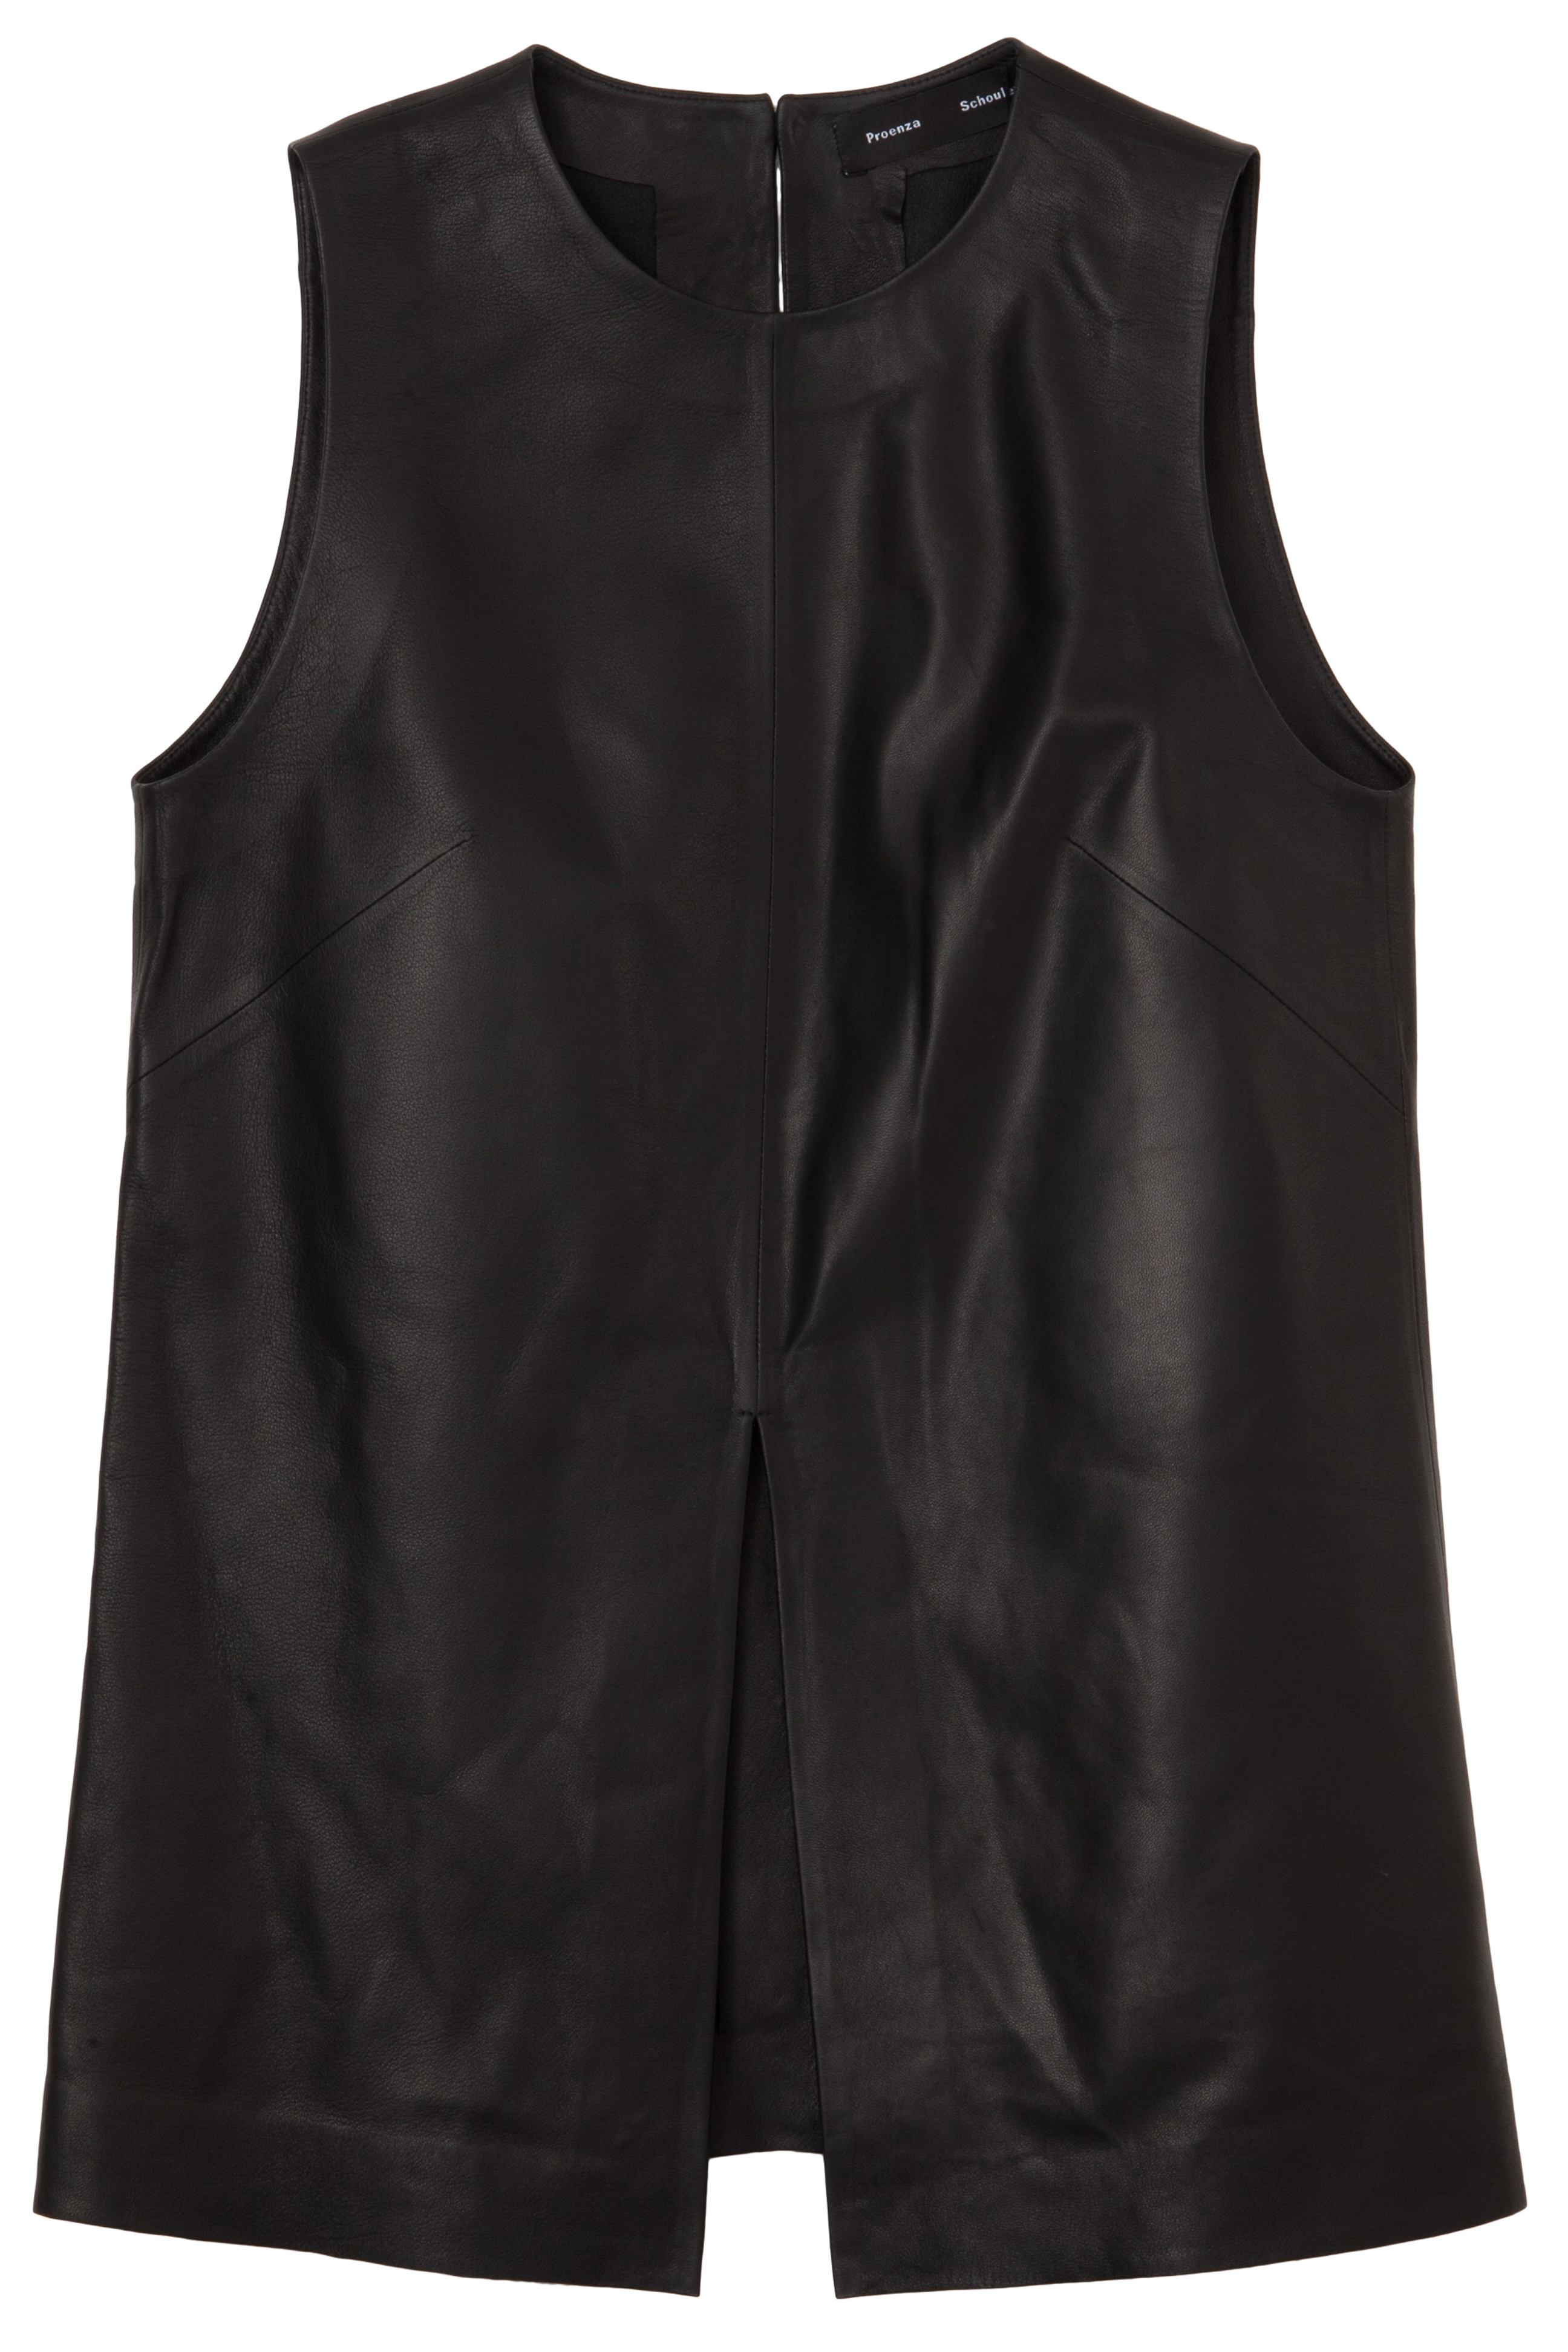 Proenza Schouler black Plonge Leather S/L Top